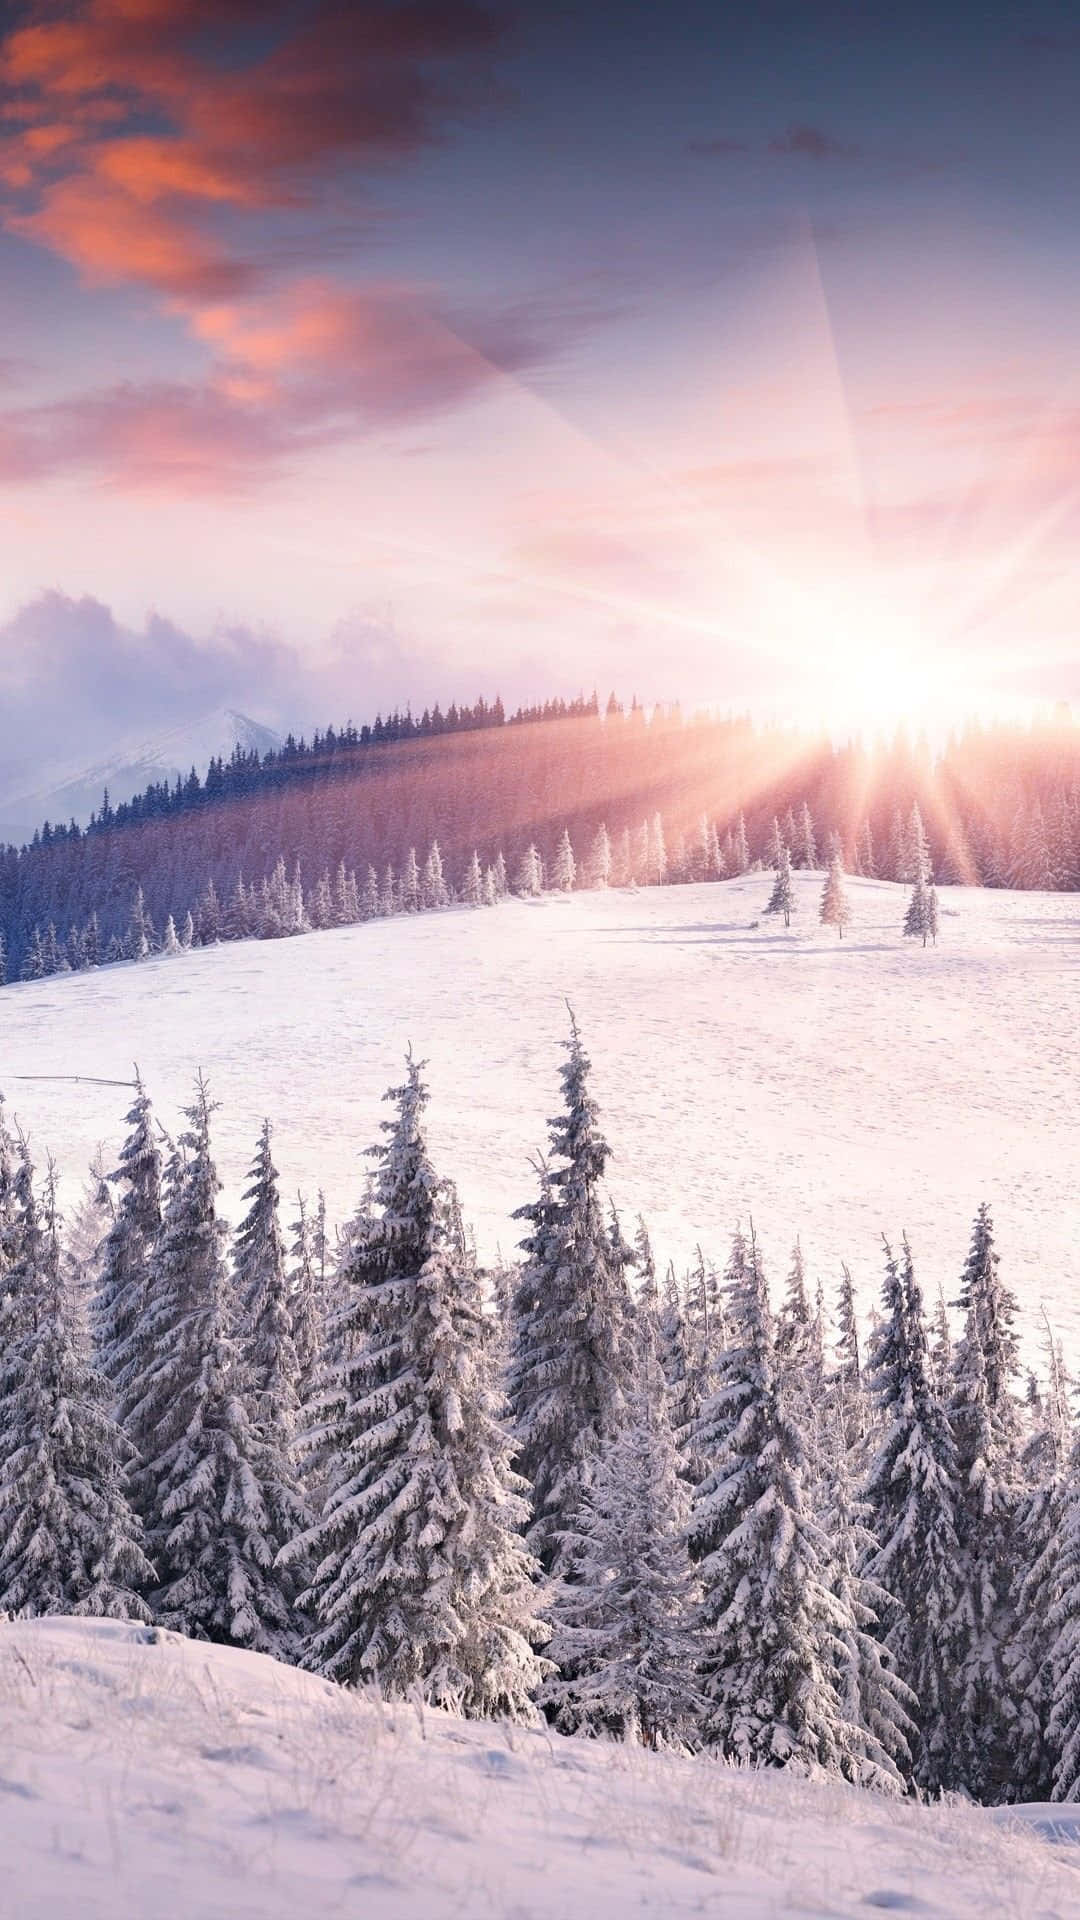 Enchanting Snowfall On A Serene Winter Evening - Iphone 6 Plus Wallpaper Wallpaper